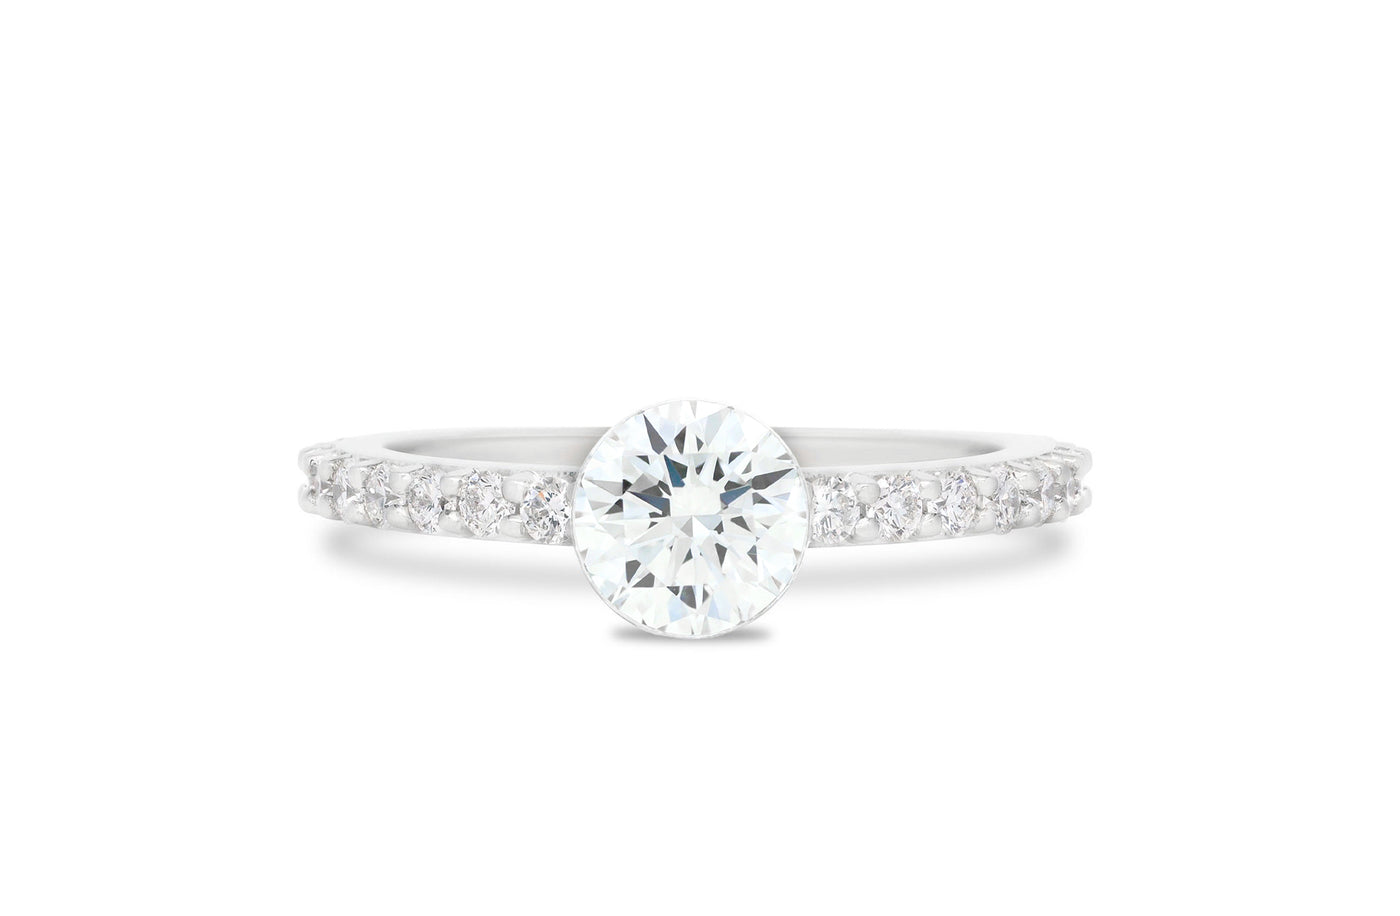 The Floeting® Diamond Ring with Diamond Set Band